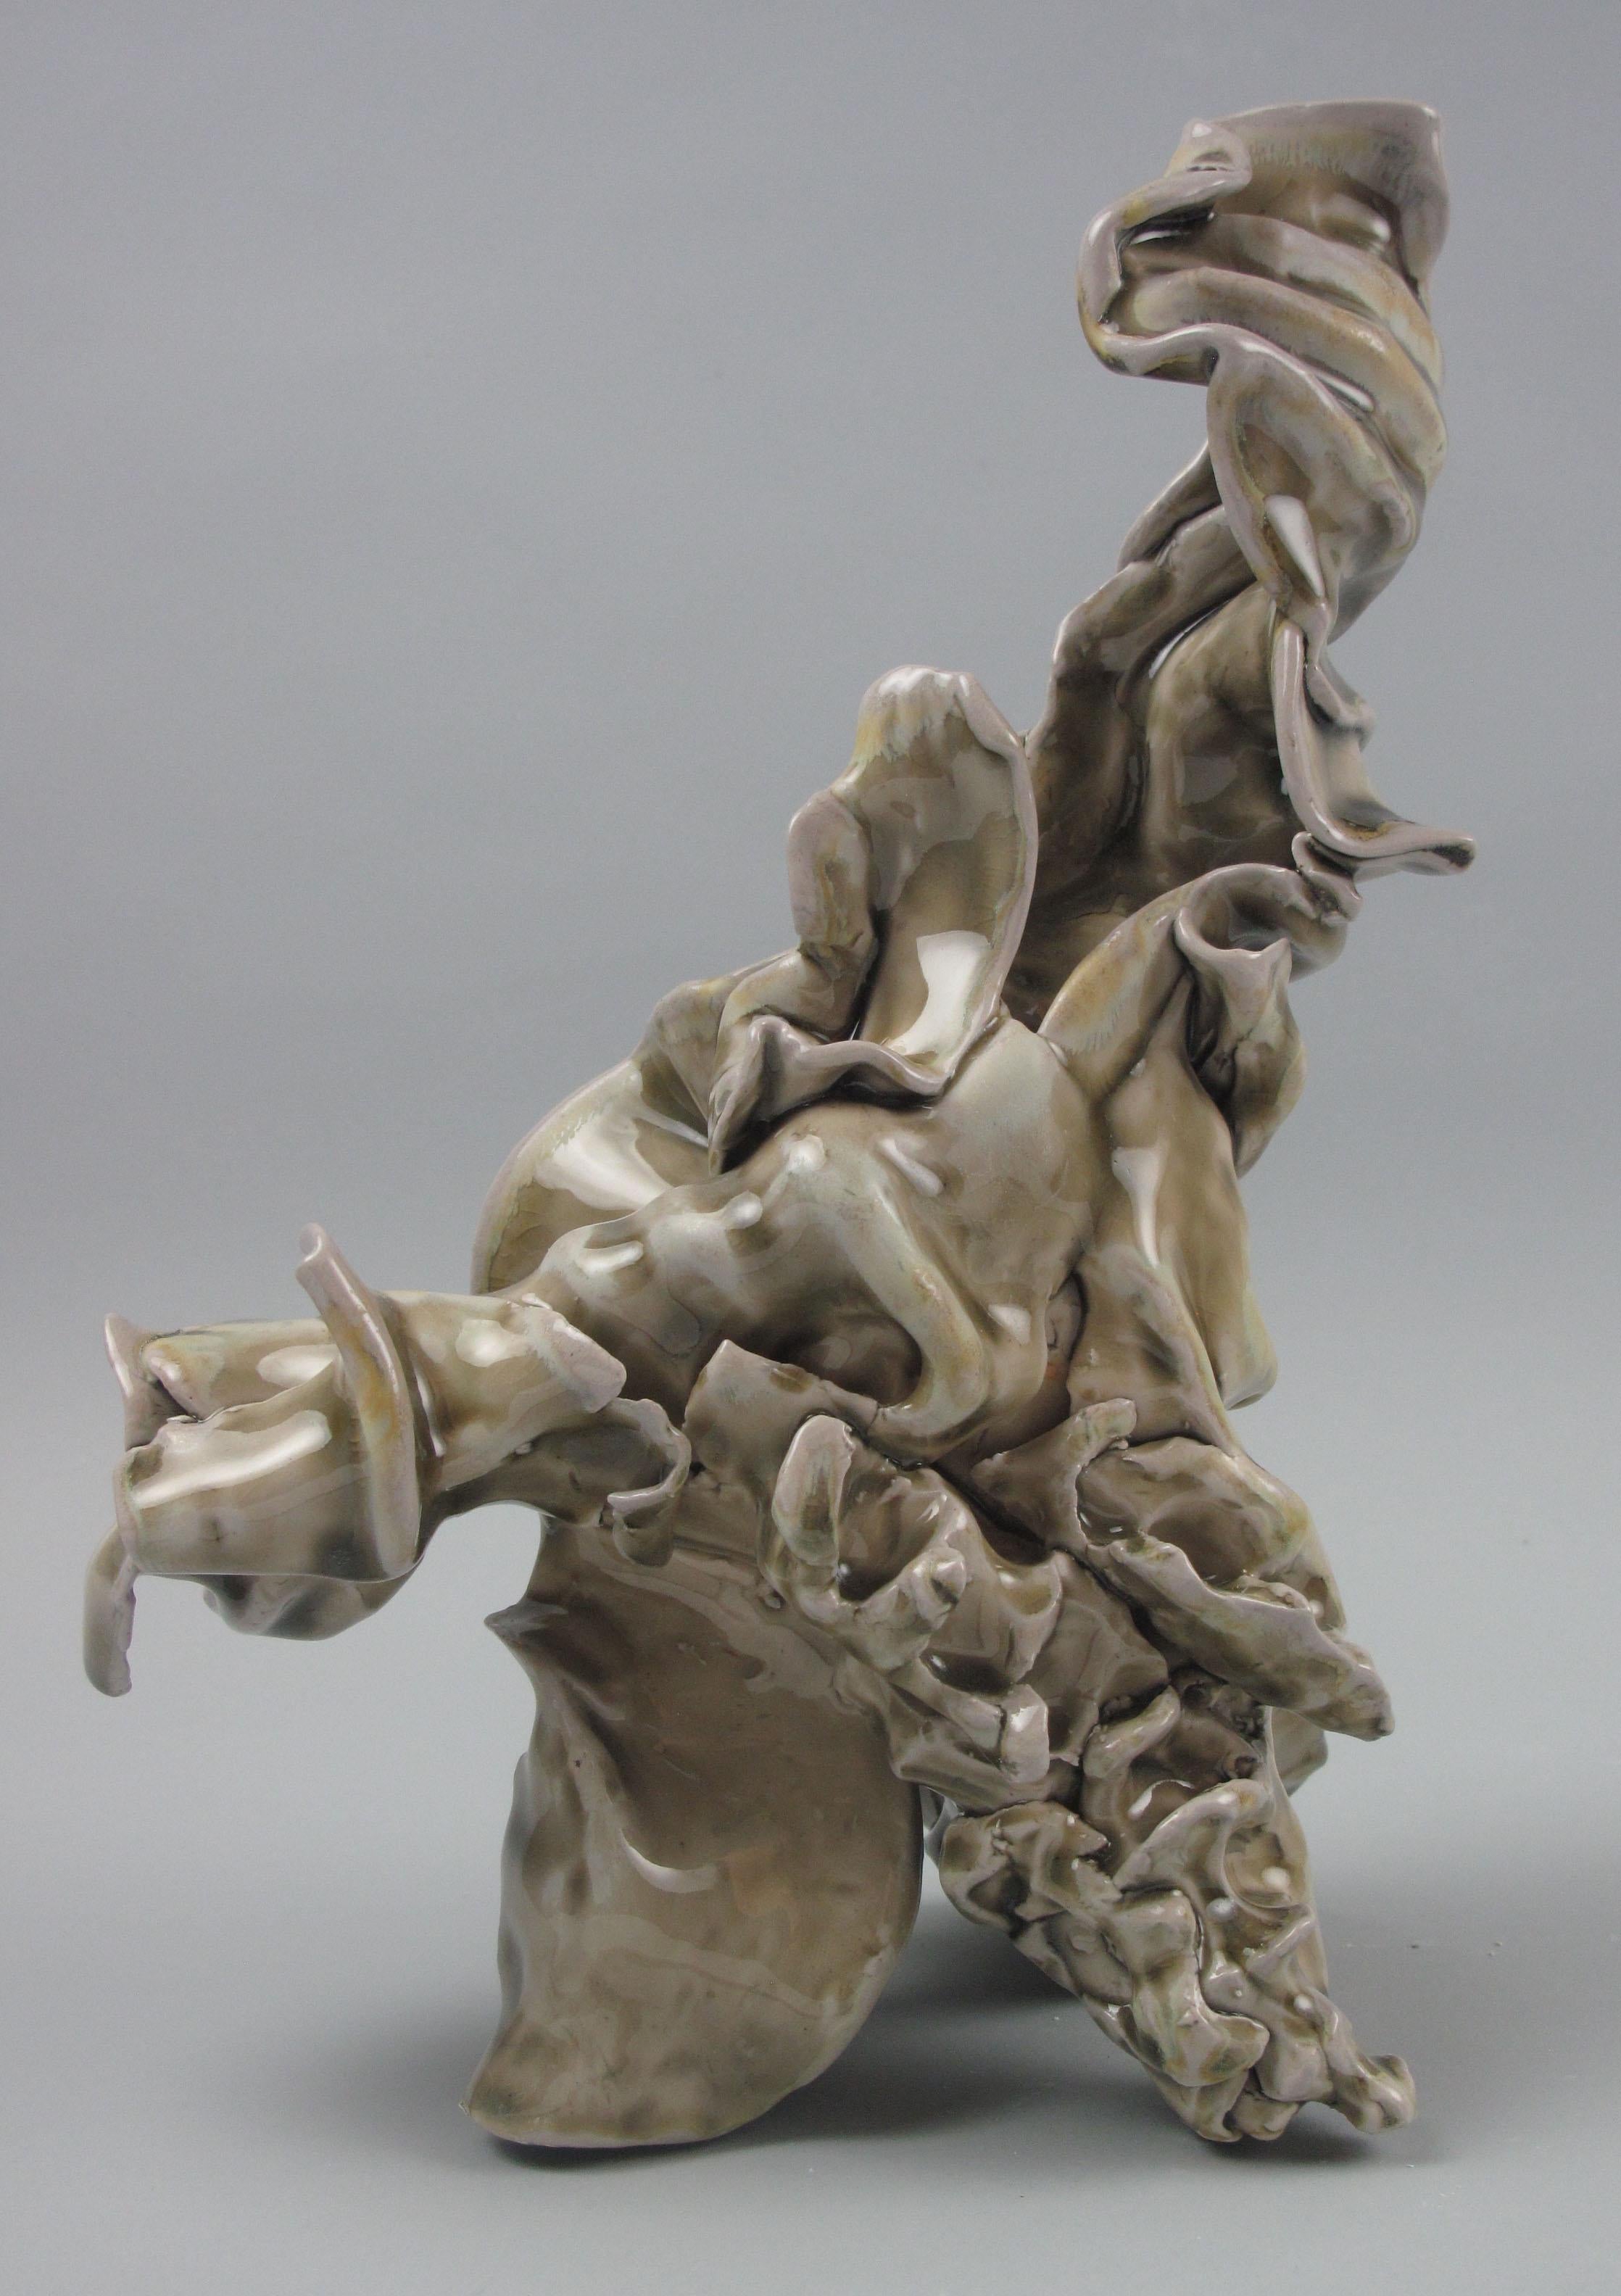 Sara Fine-Wilson Abstract Sculpture - "Carry", gestural, ceramic, sculpture, green, yellow, brown, white, stoneware